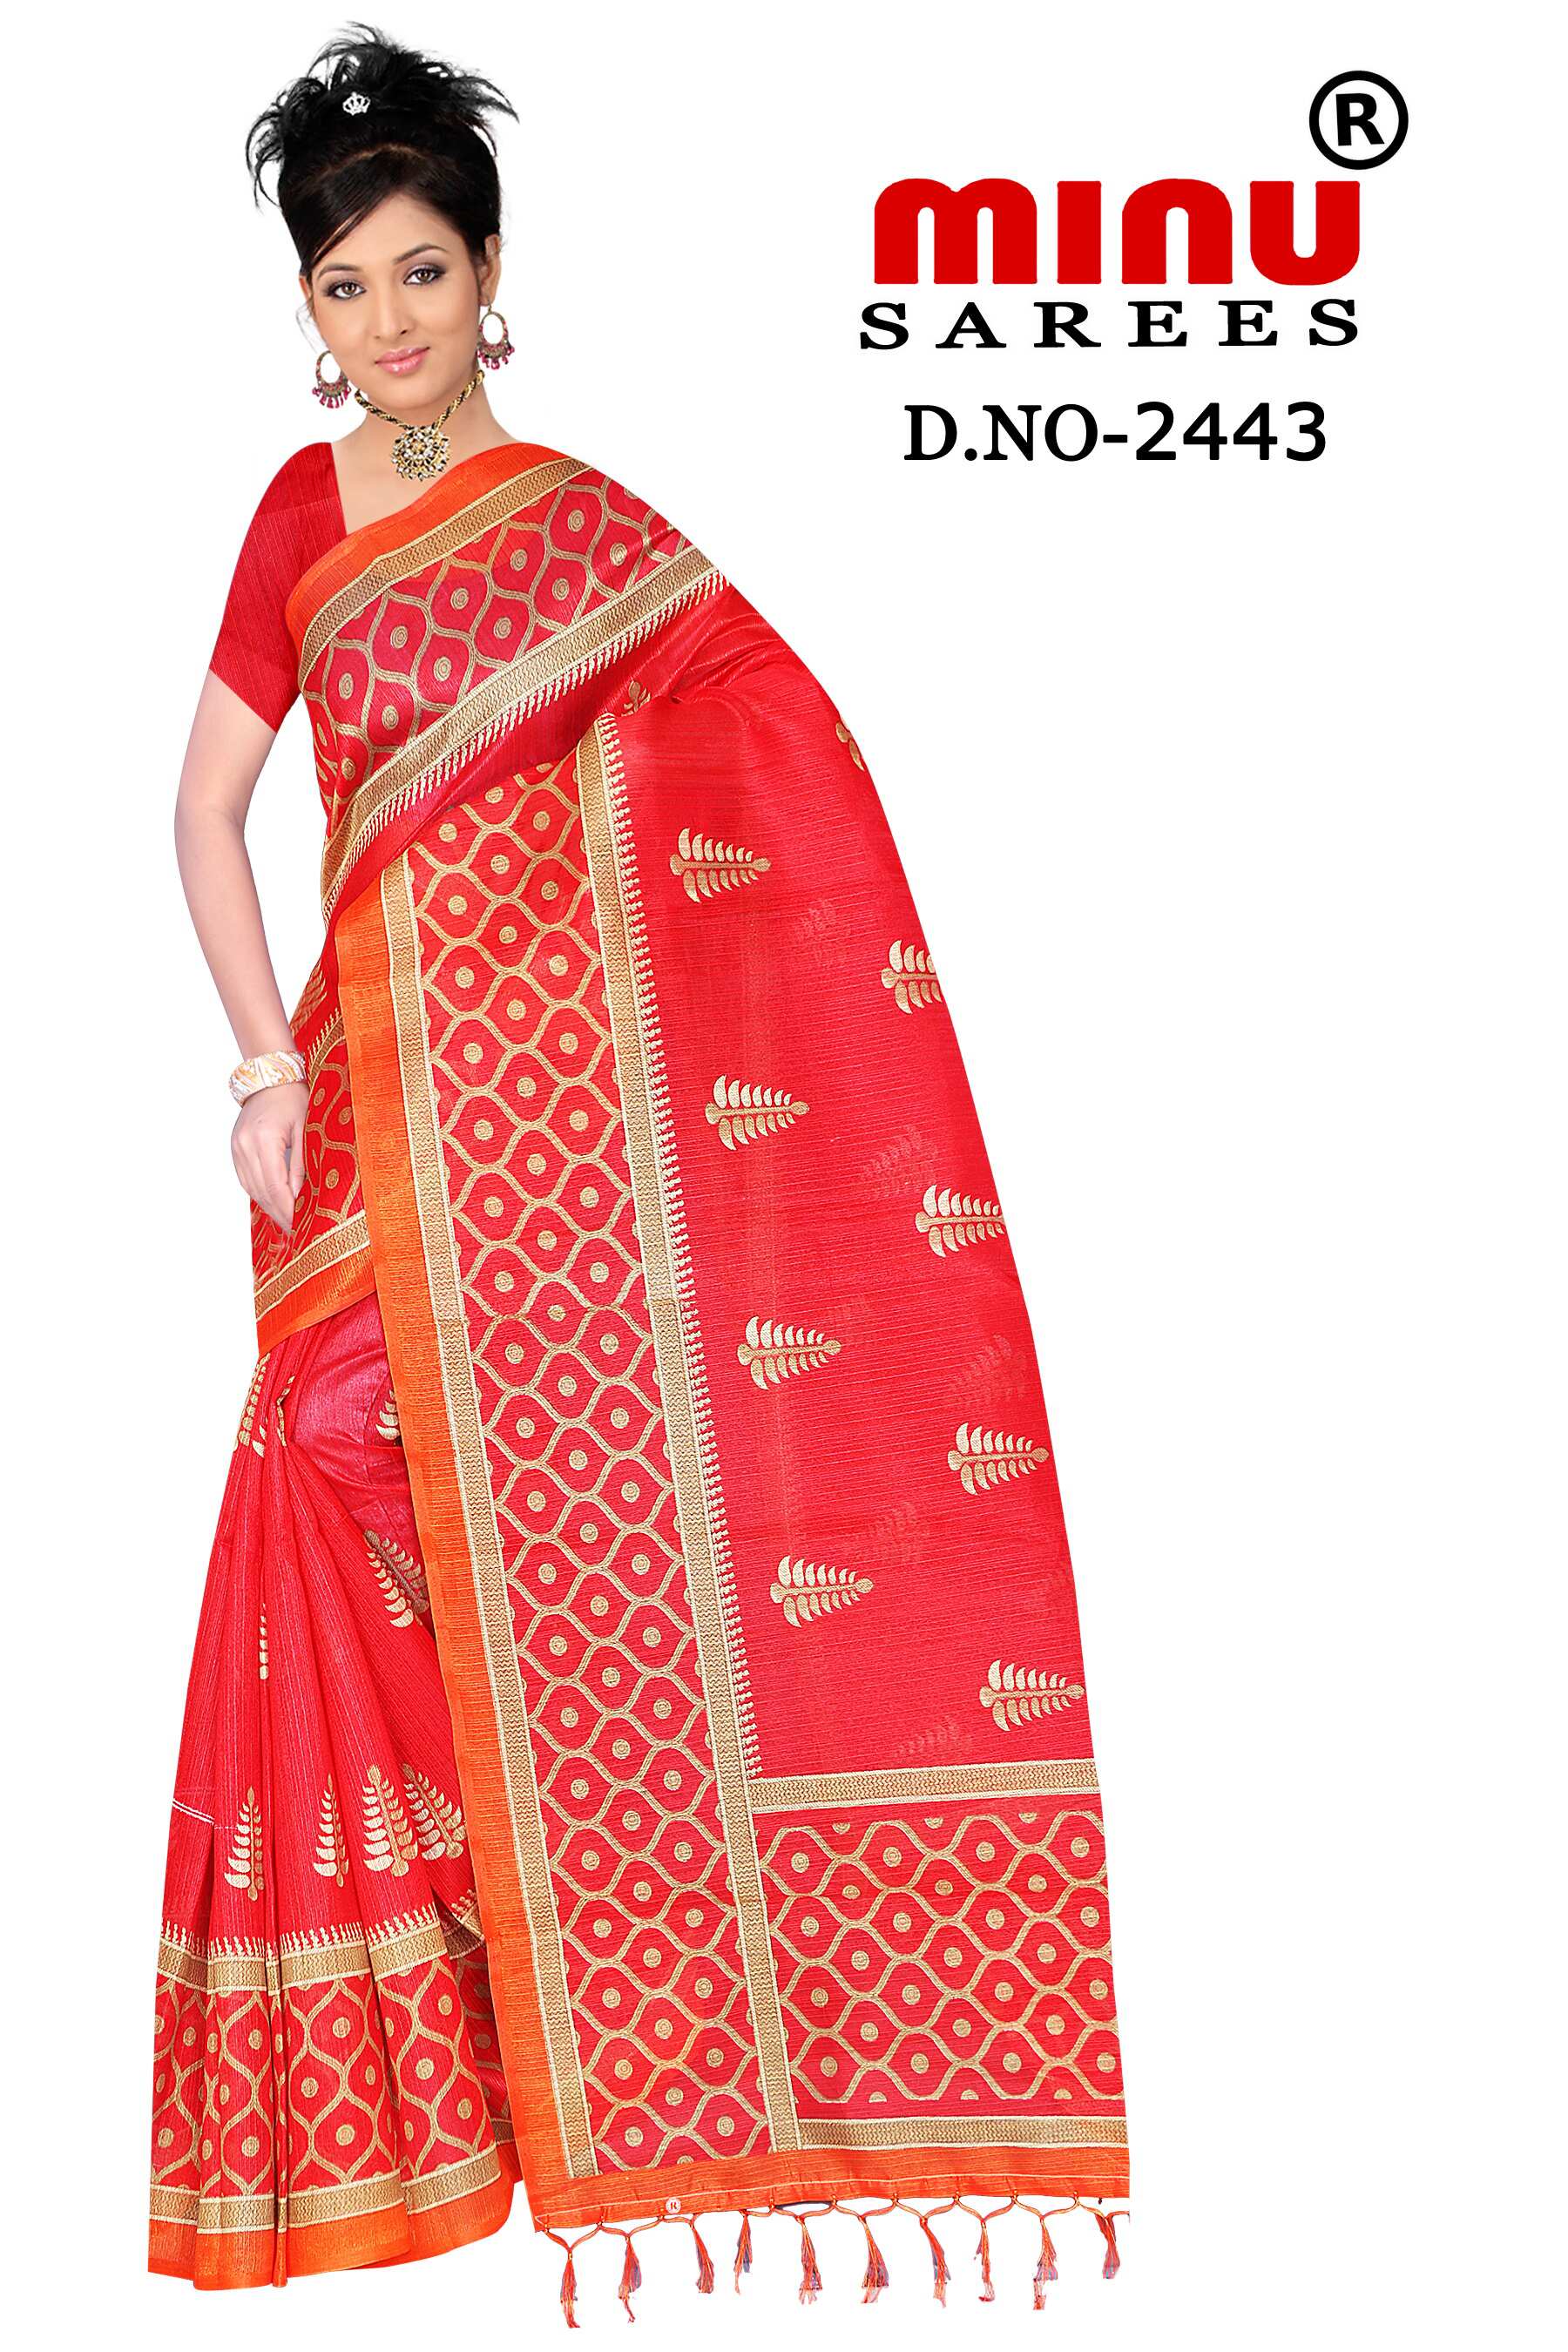 Fancy saree wearing women posing in image